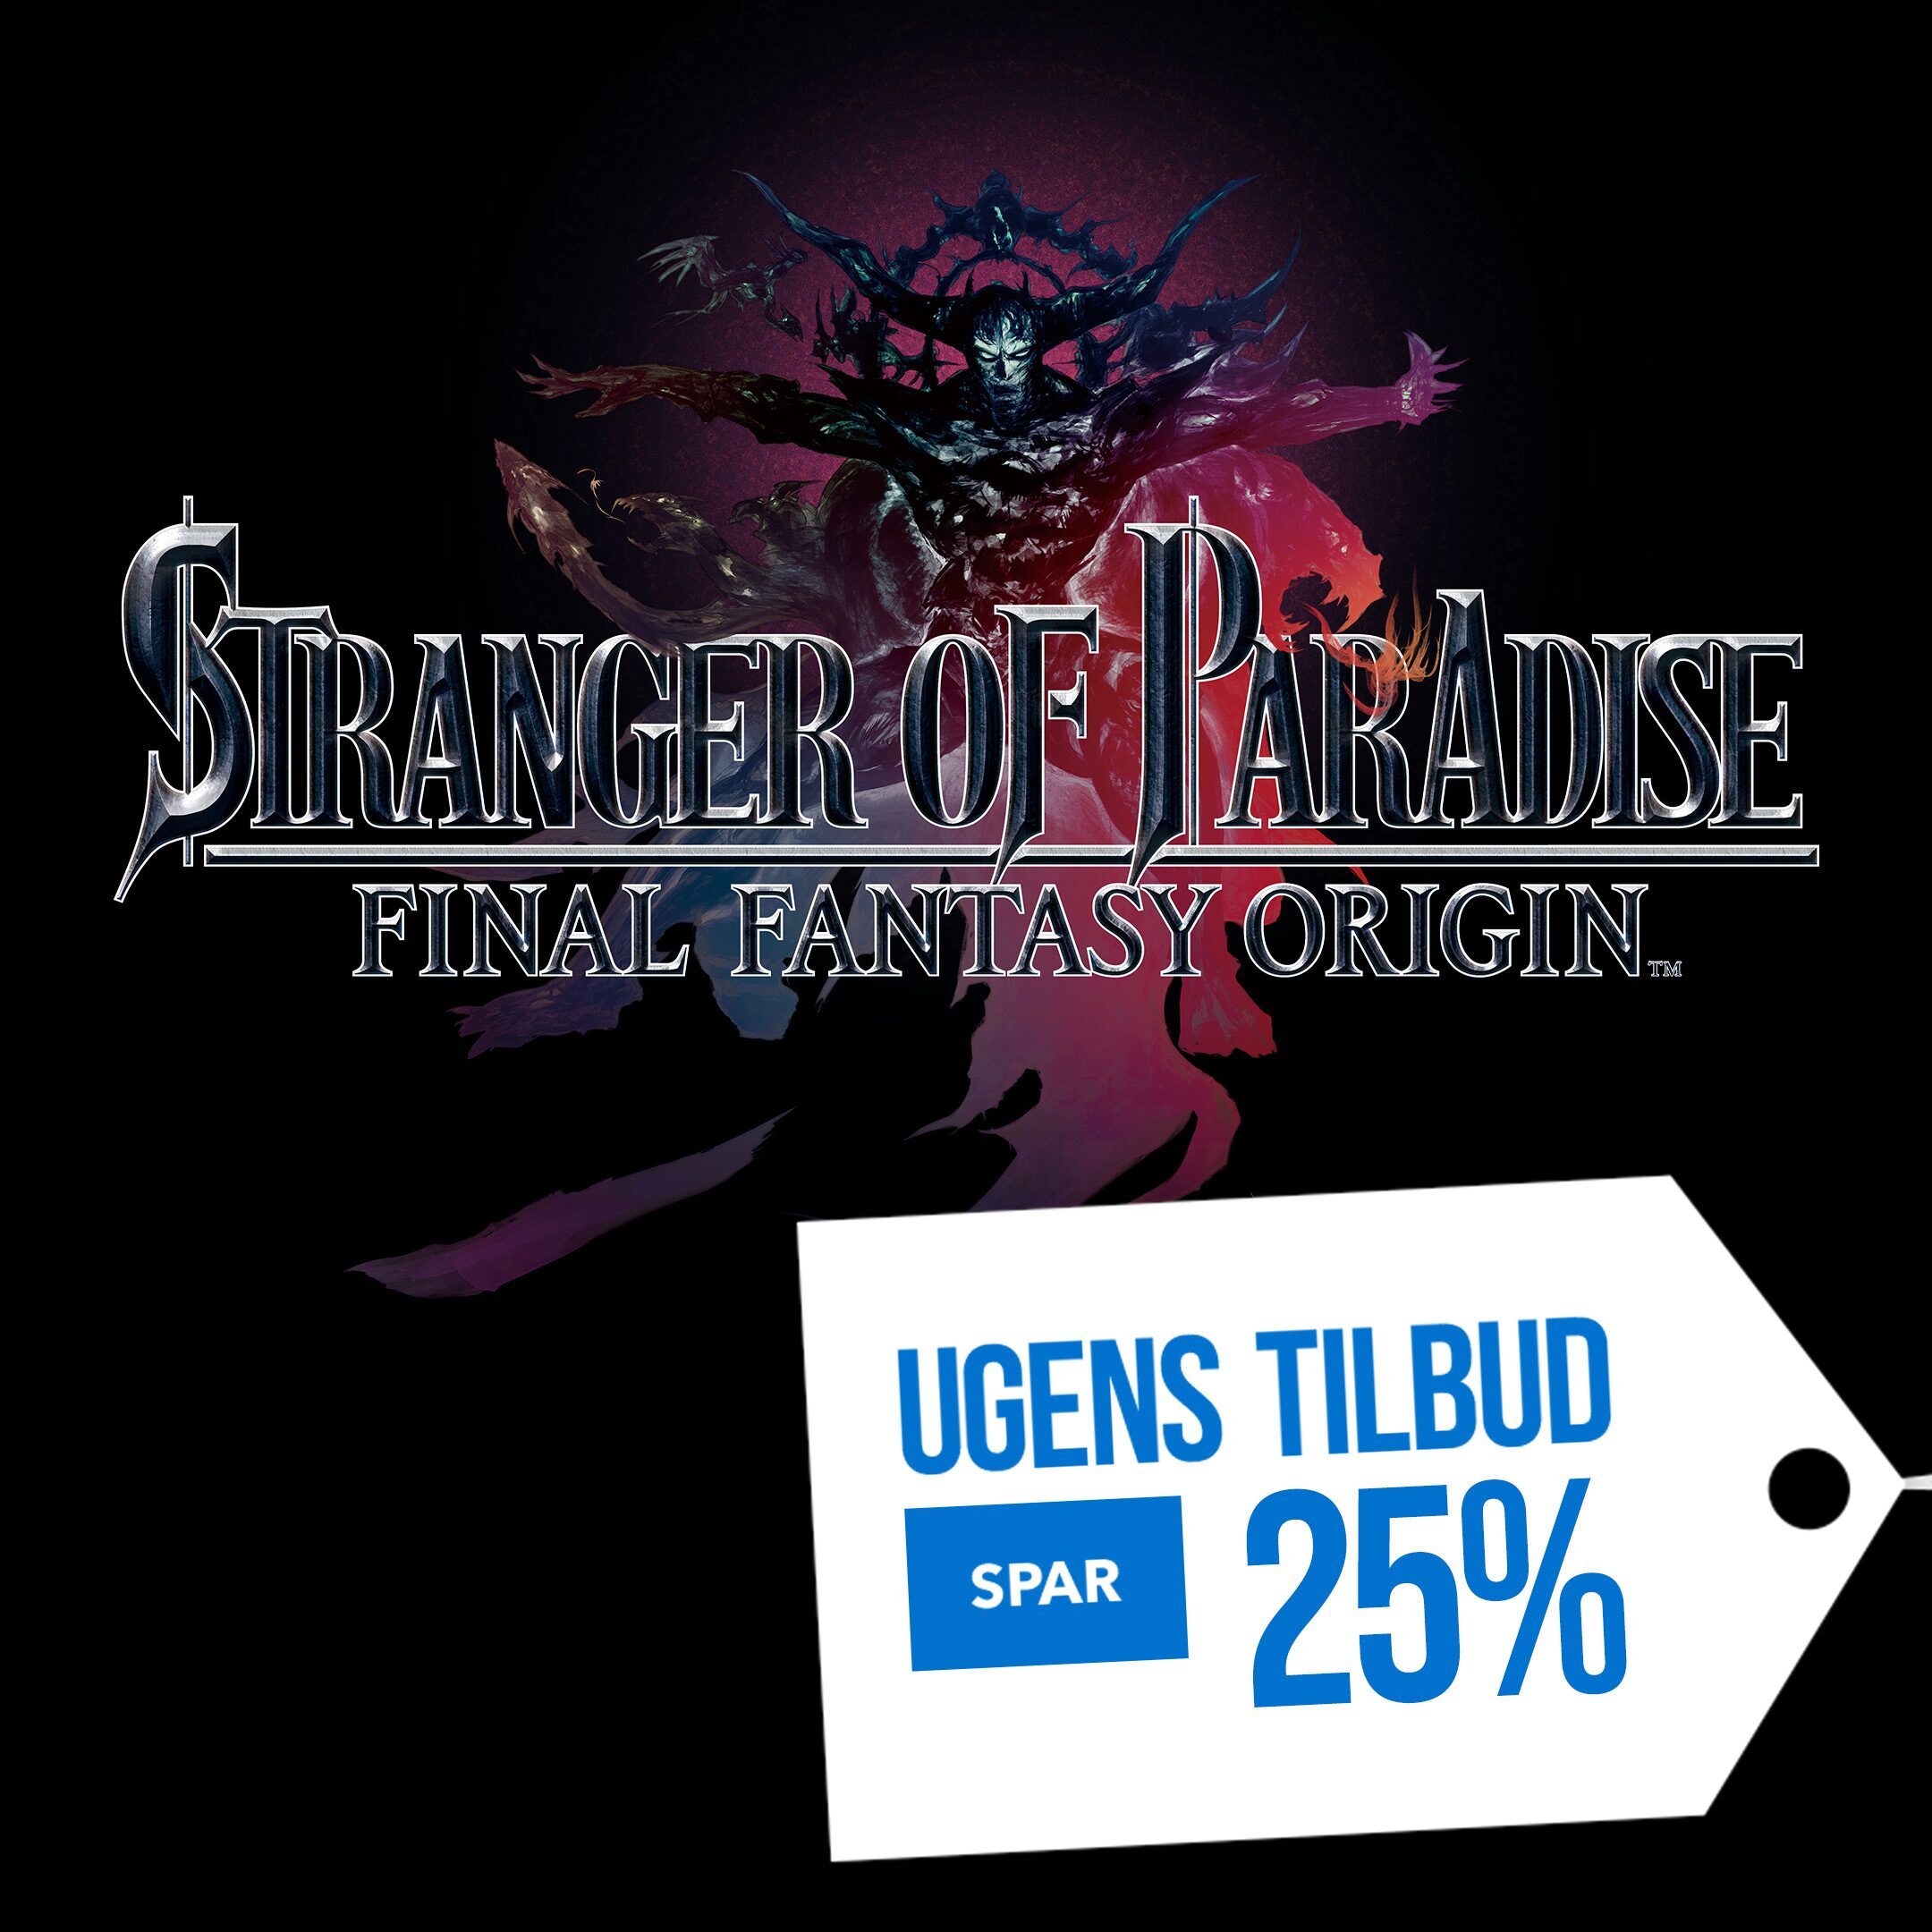 [PROMO] Deal of the Week - Stranger of Paradise Final Fantasy Origin